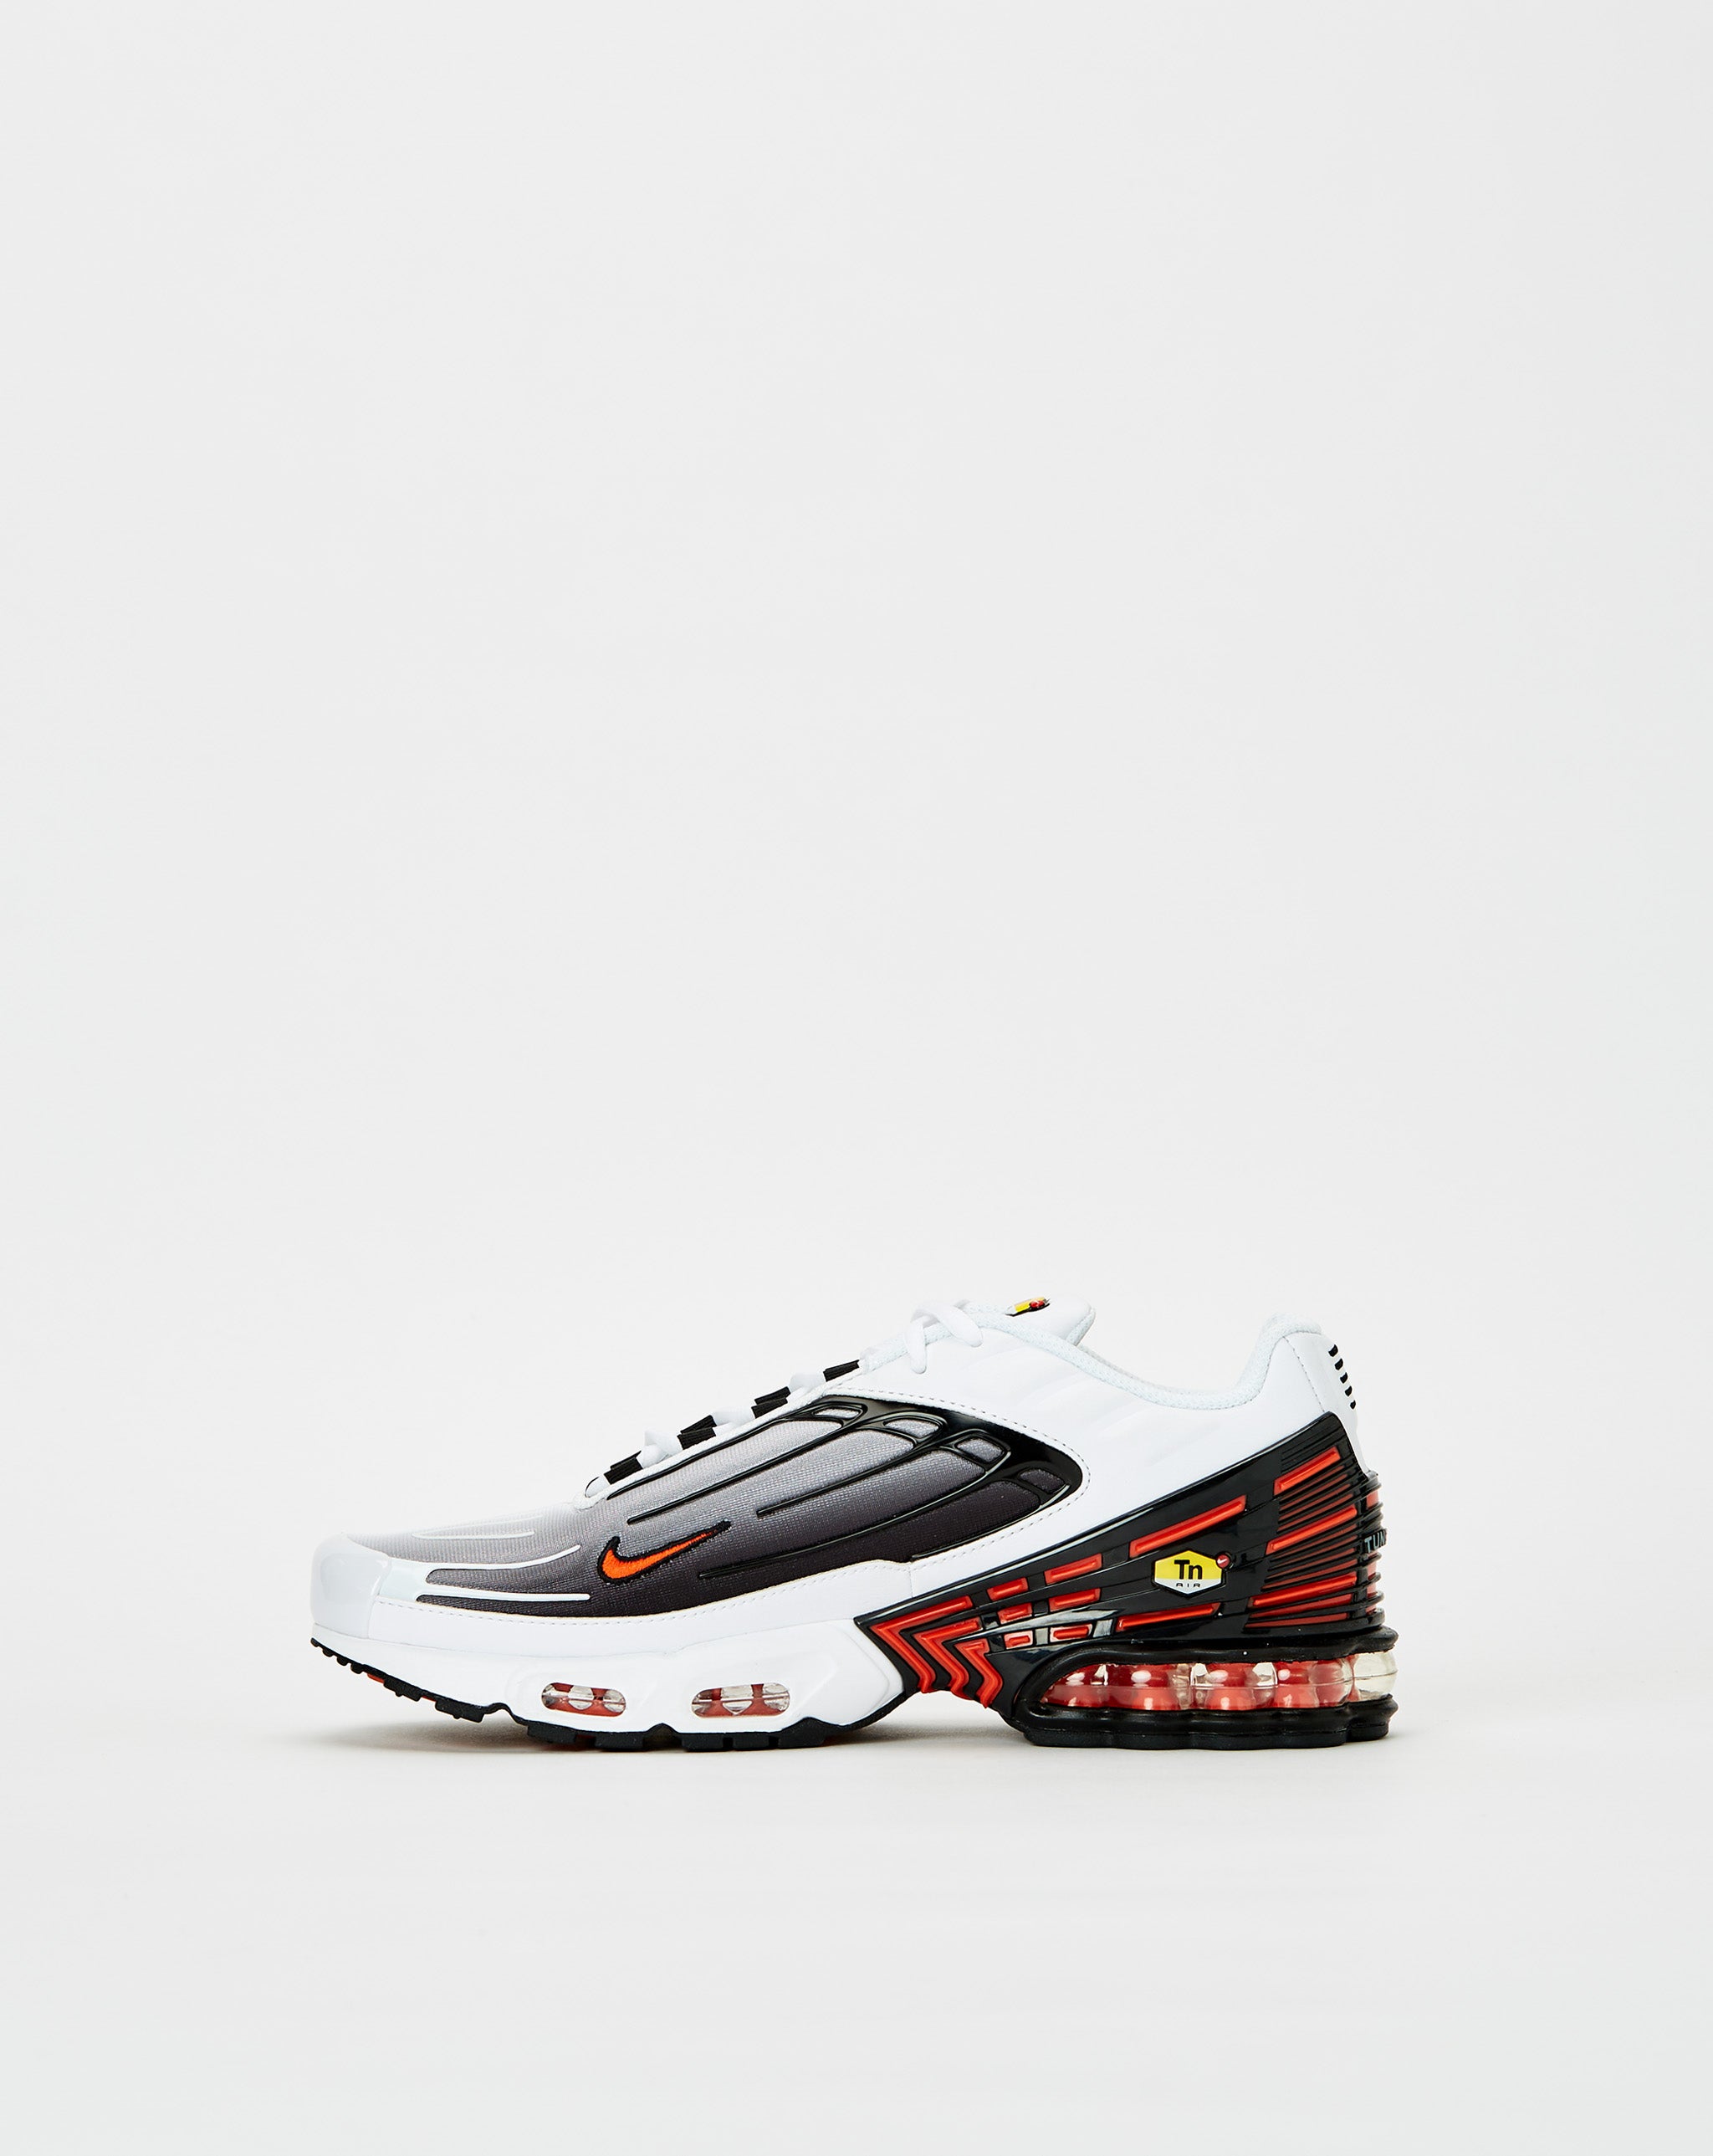 Nike Lakai cambridge ms2210252a00 mens white suede skate inspired sneakers shoes 12  - Cheap Urlfreeze Jordan outlet